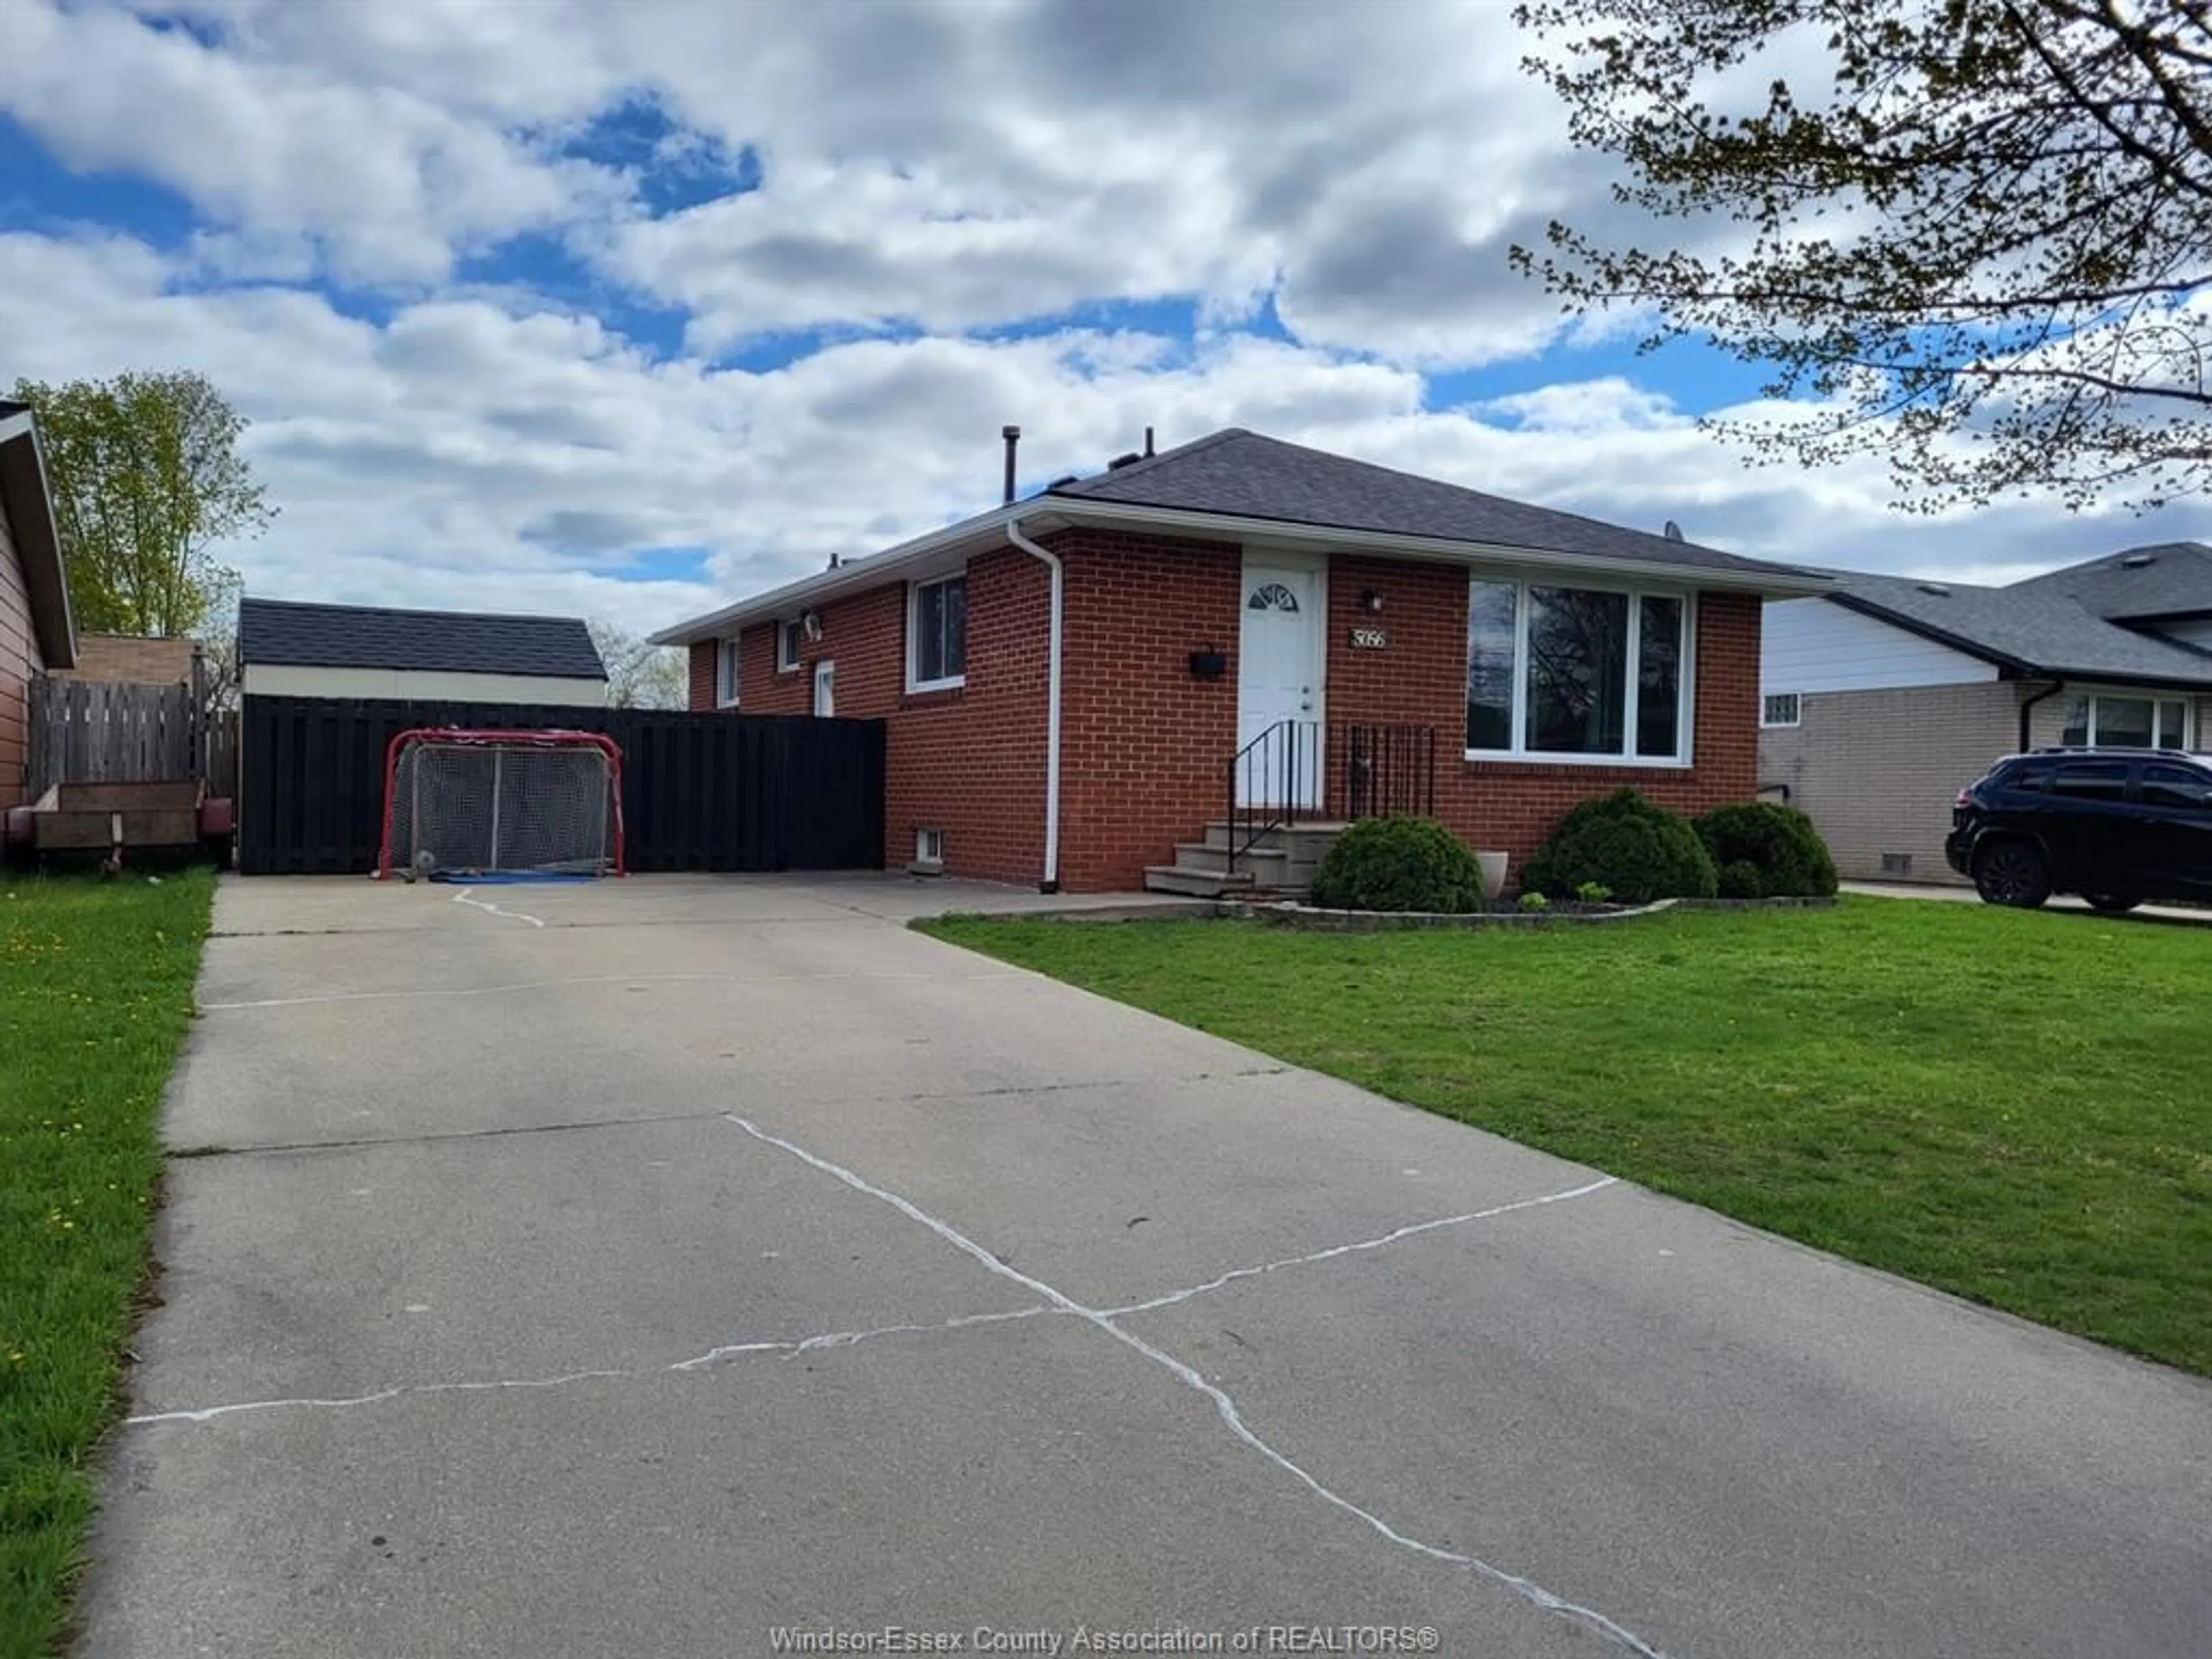 Frontside or backside of a home for 5056 COLBOURNE, Windsor Ontario N8T 1T8